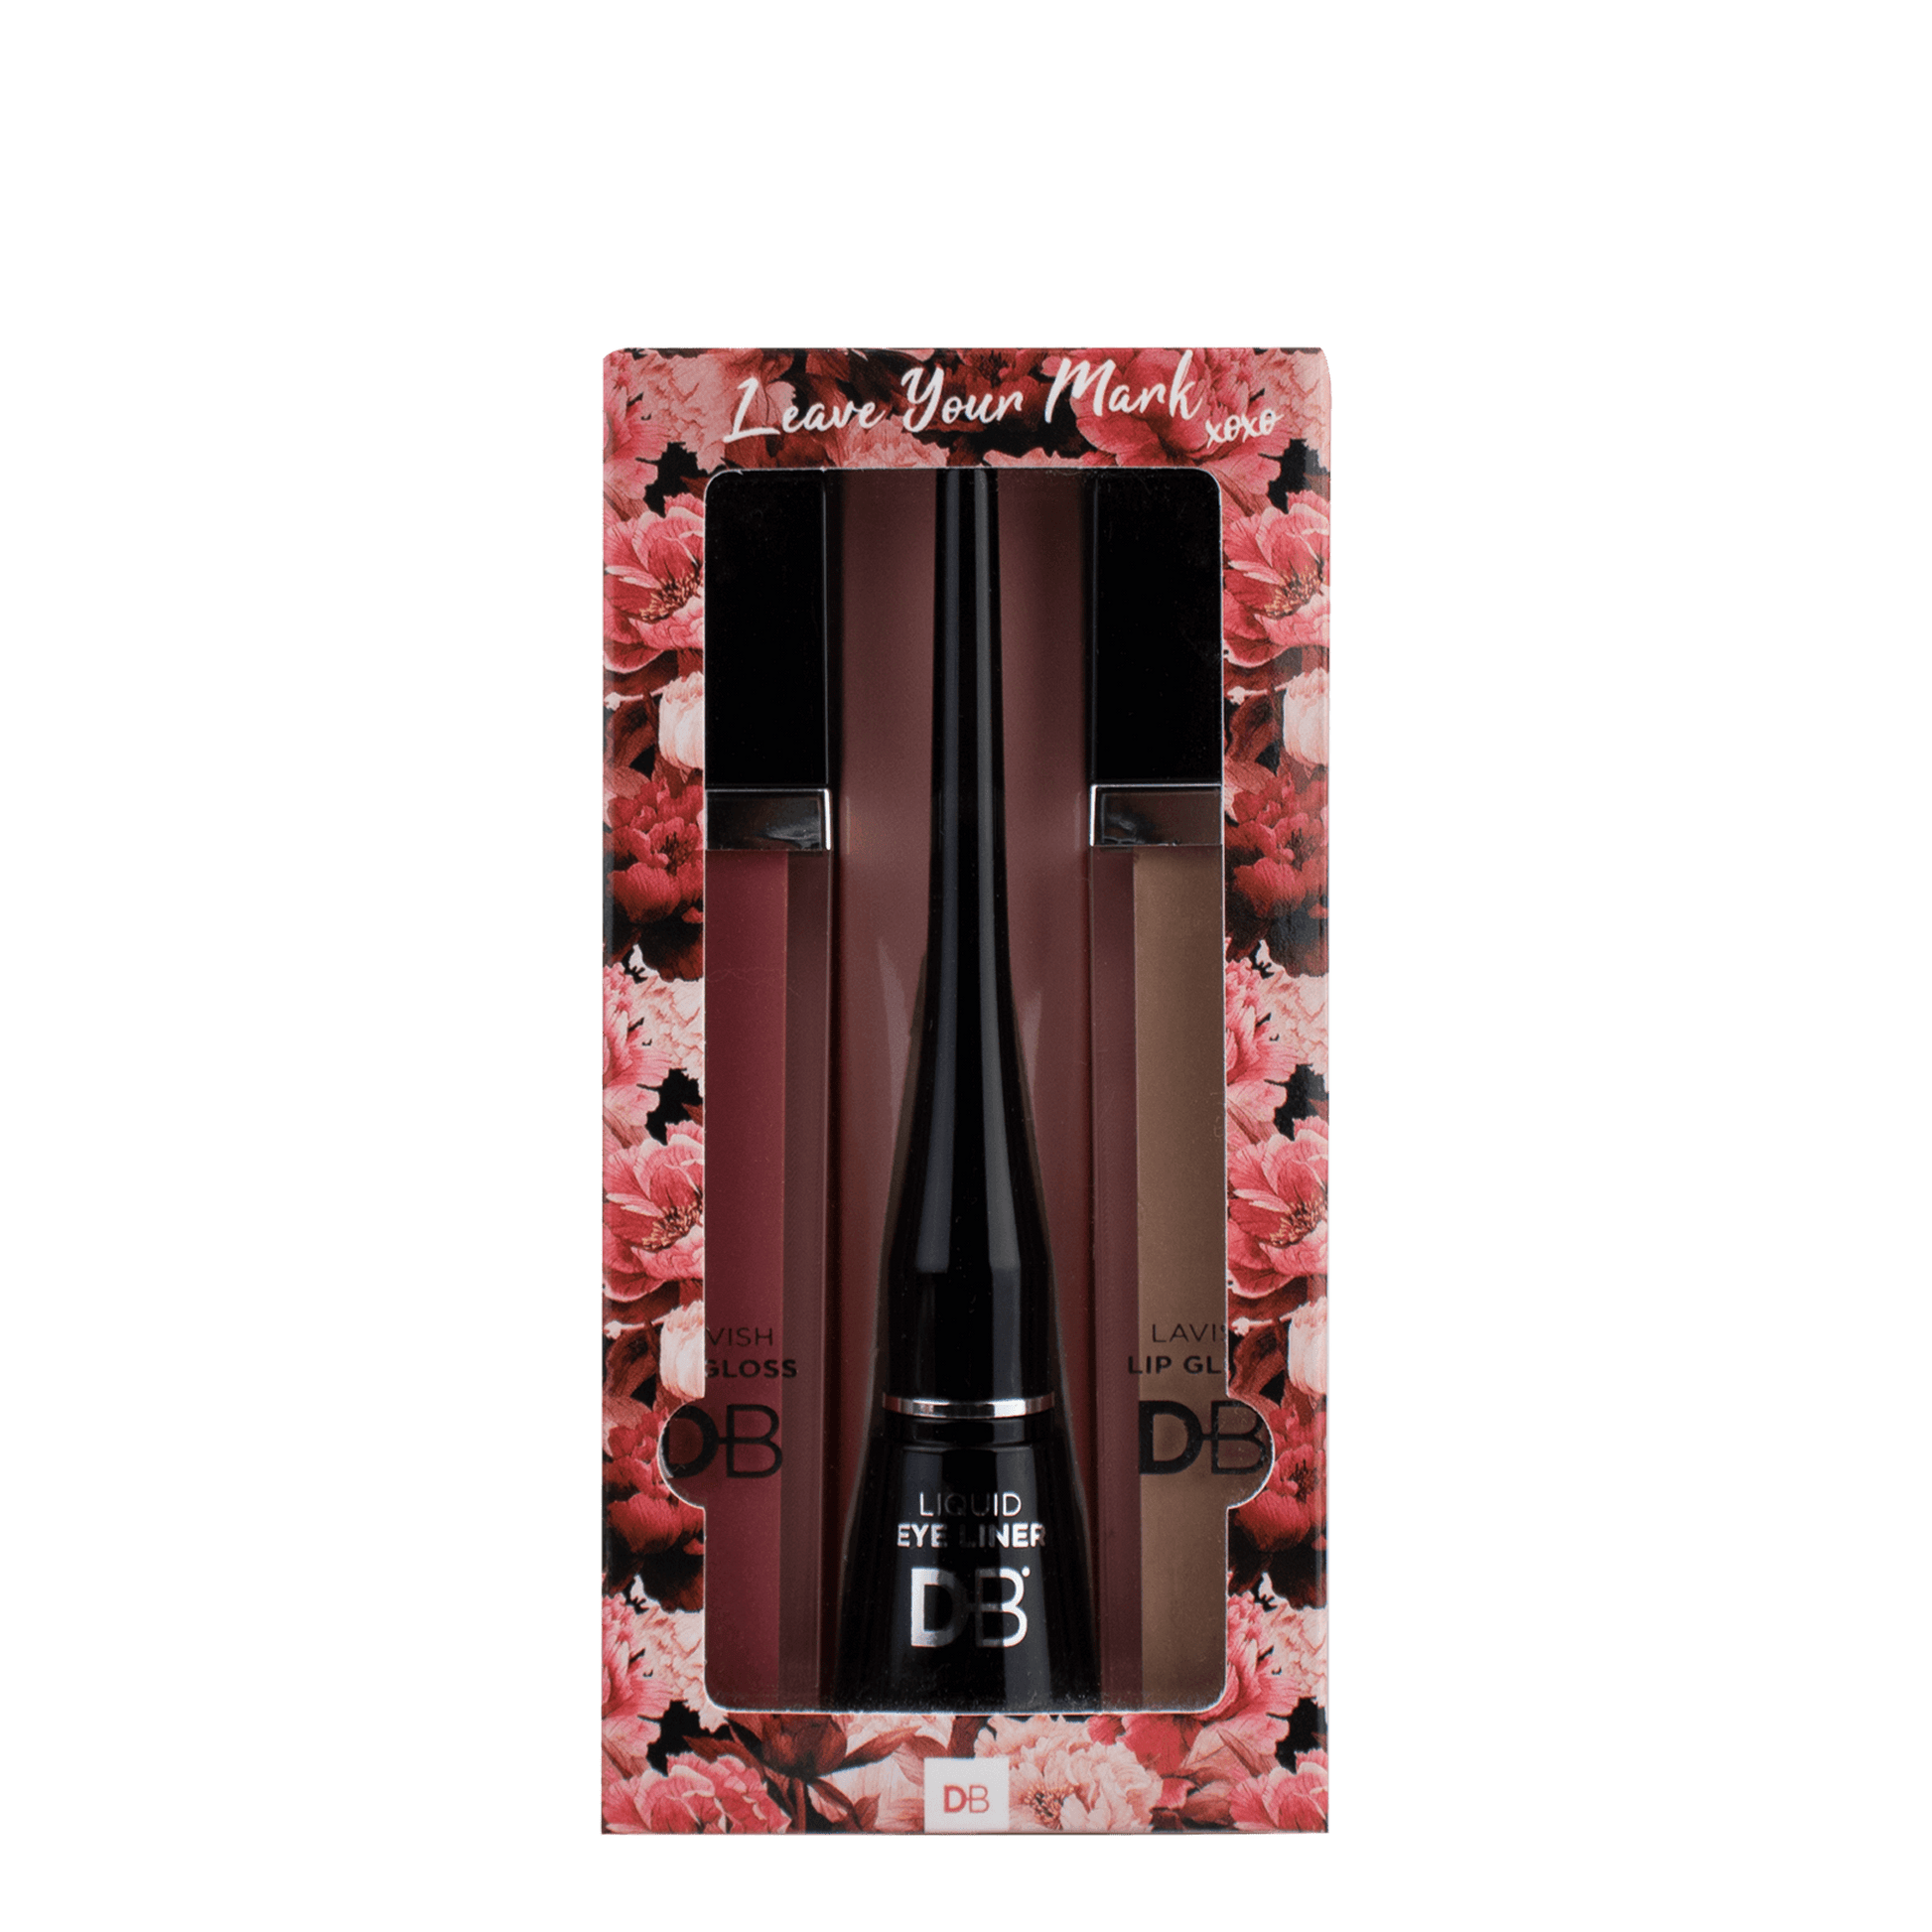 Leave Your Mark 2-Piece Lip Gloss + Liquid Eyeliner Kit | DB Cosmetics | 02